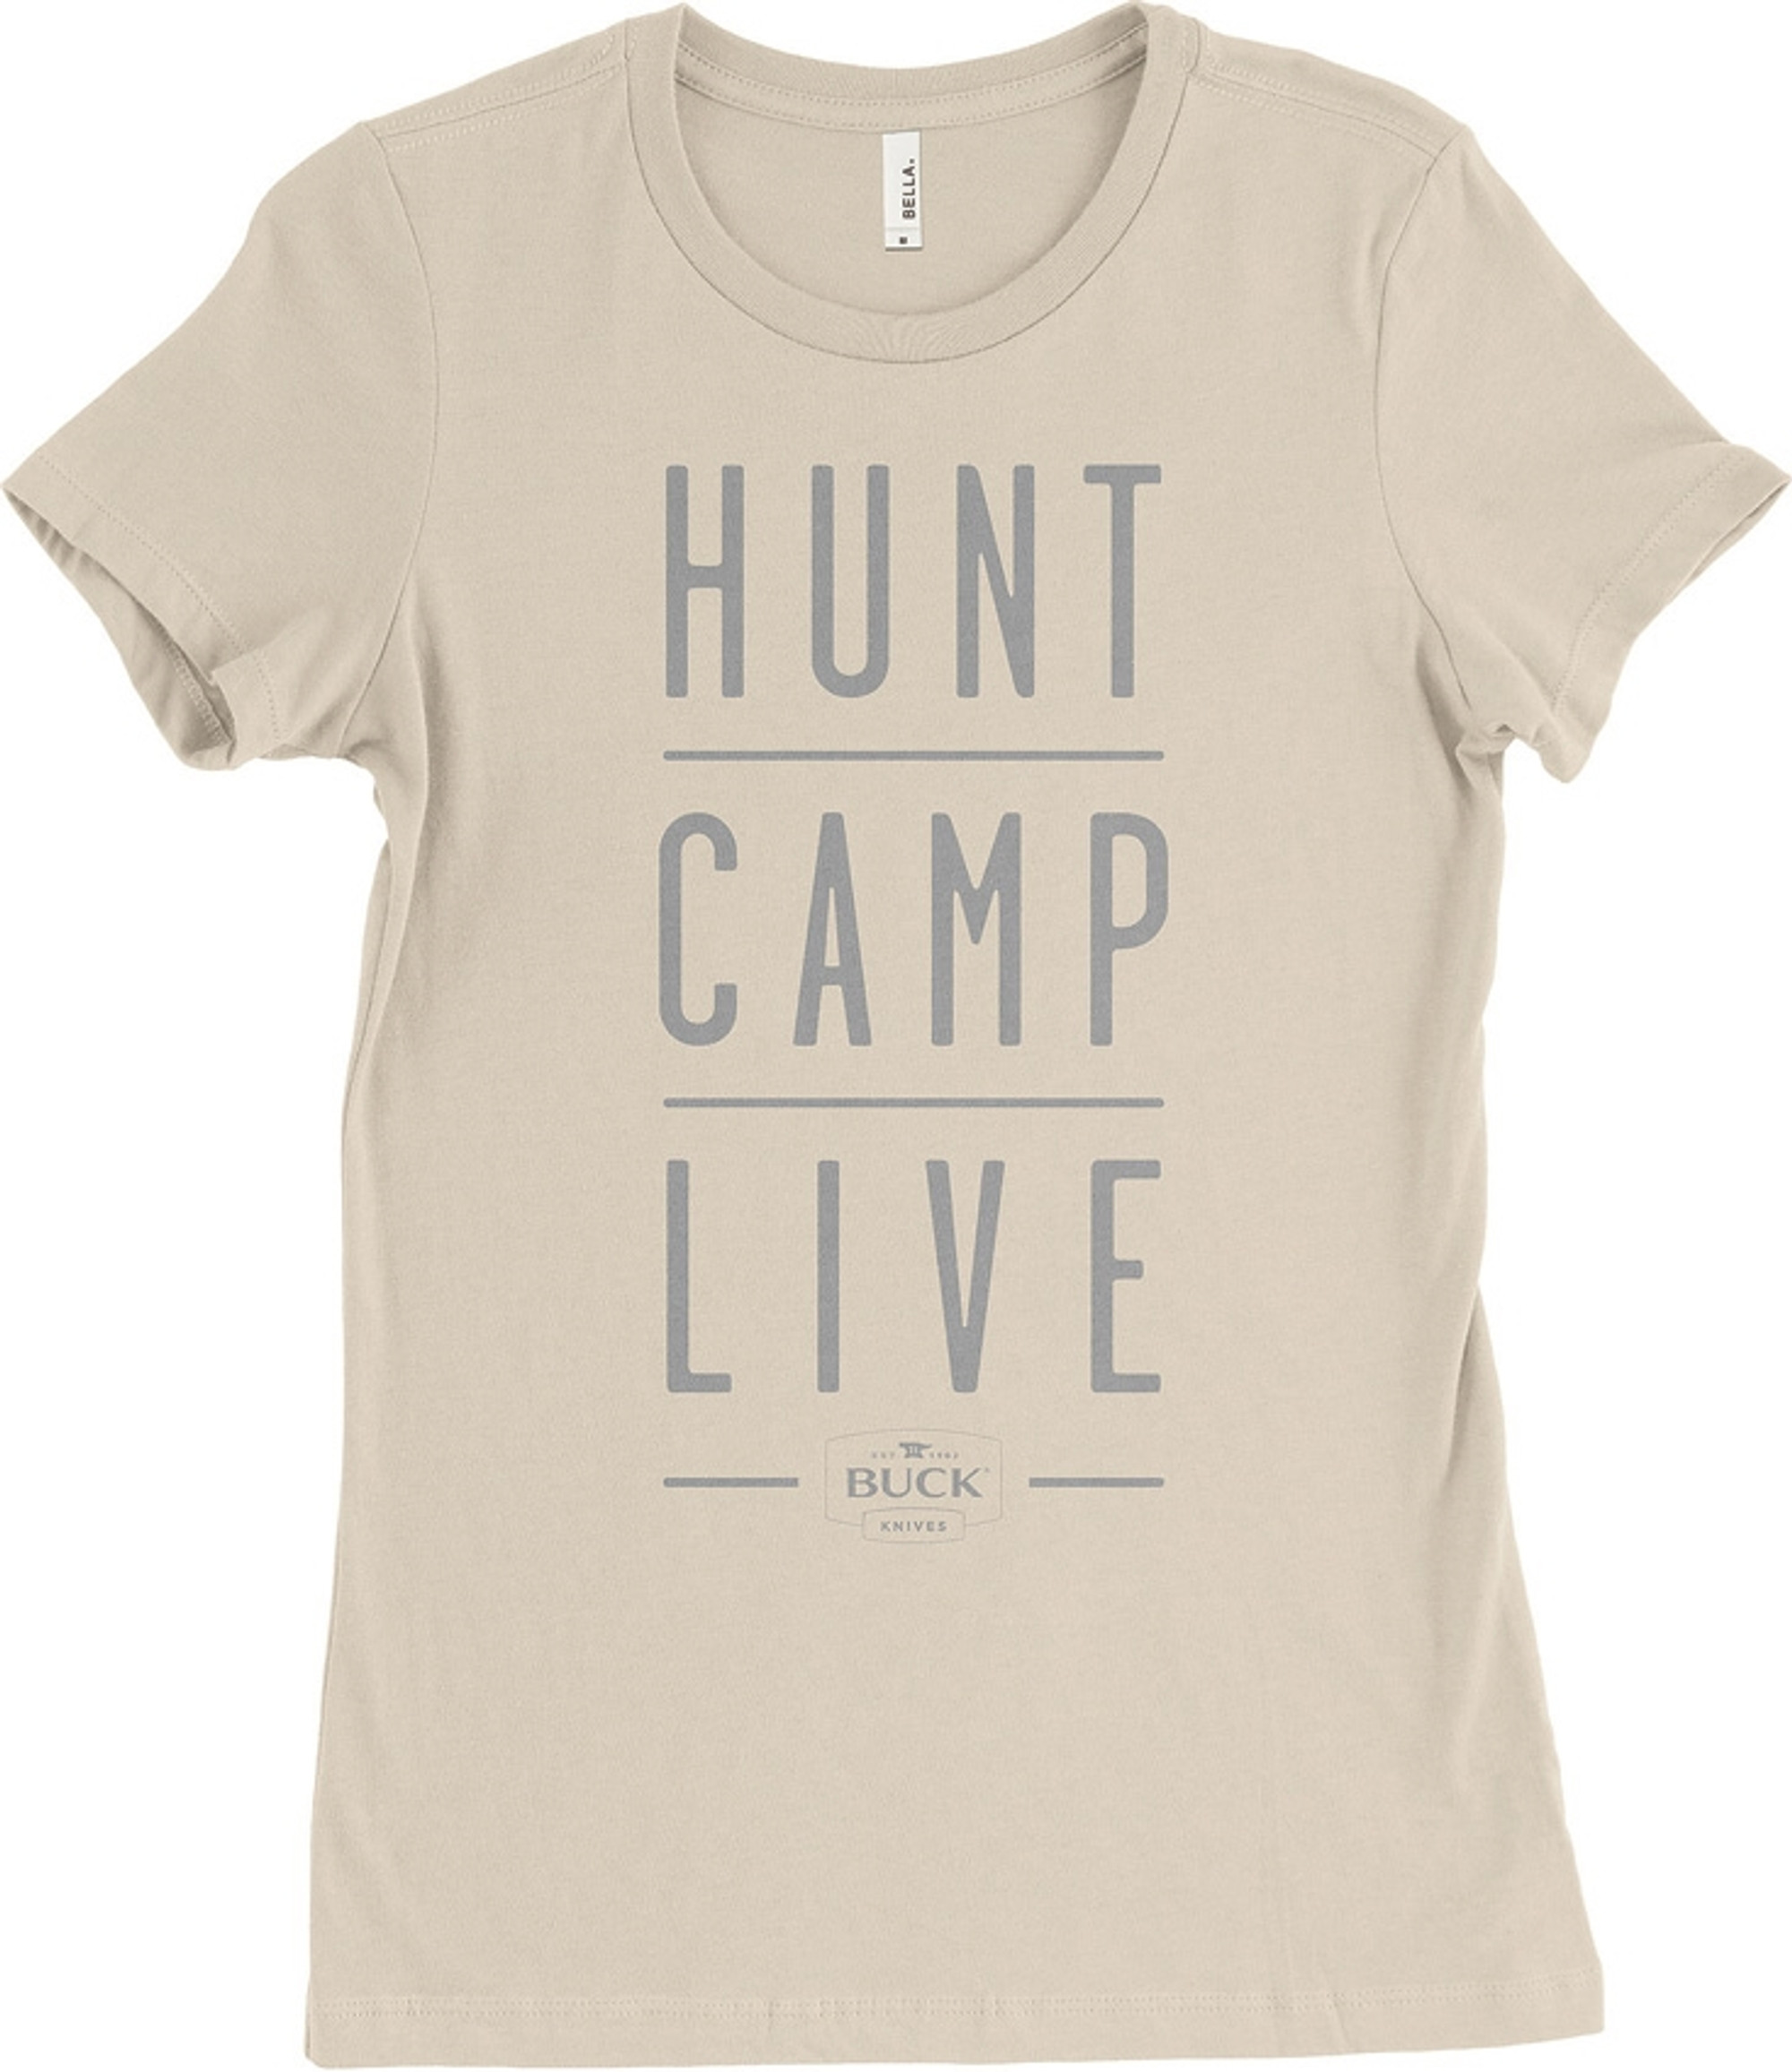 Womens Hunt/Camp T-Shirt XL